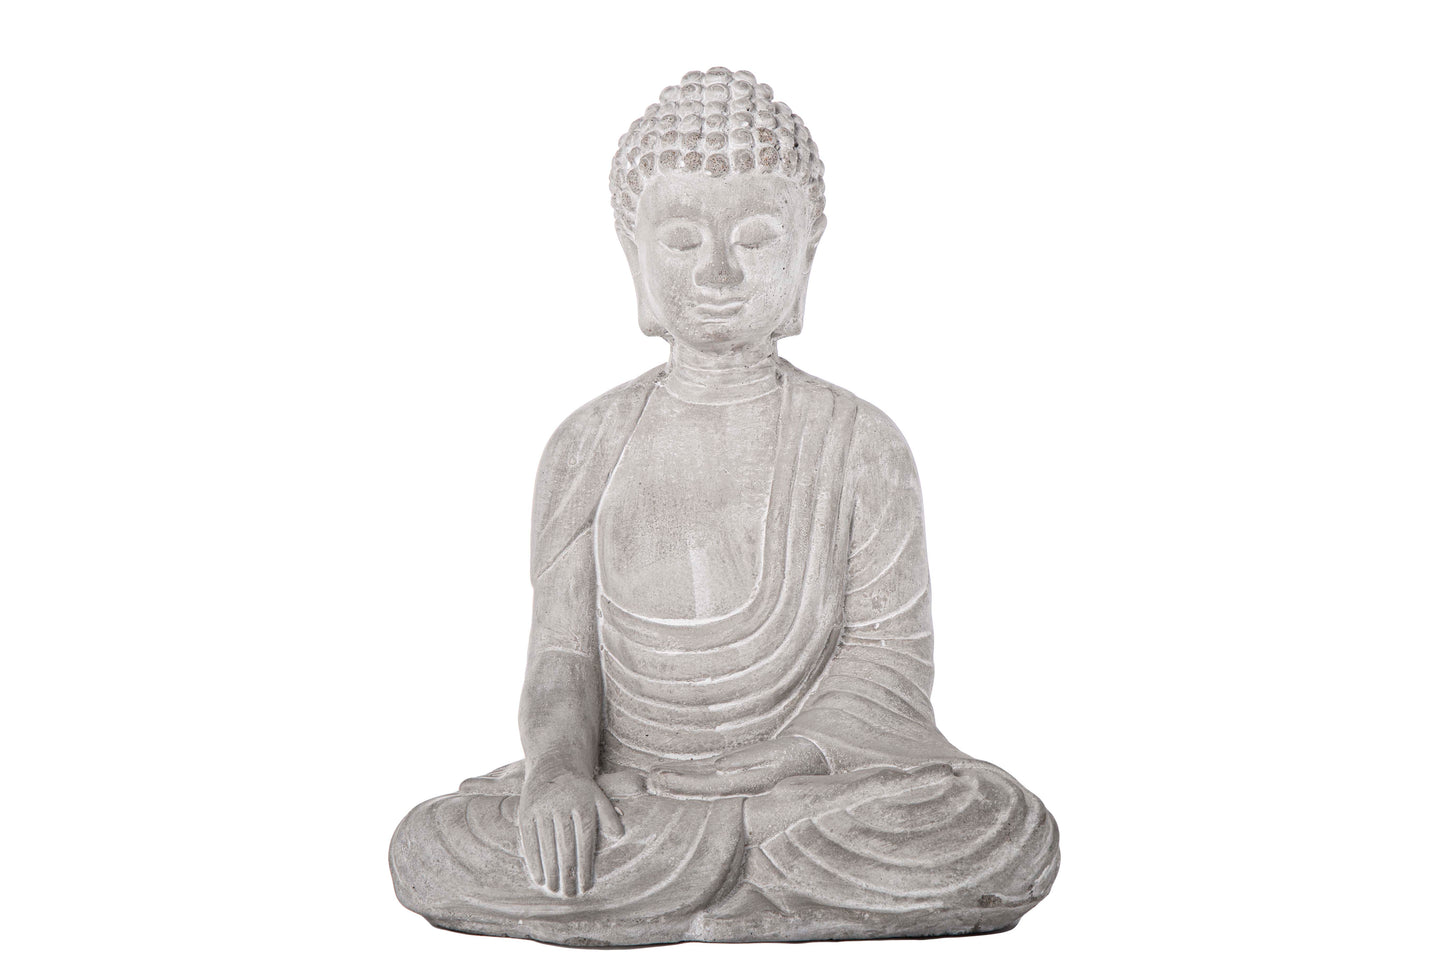 13" Cement Royal Meditating Buddha Figurine in Dhyana Mudra Position